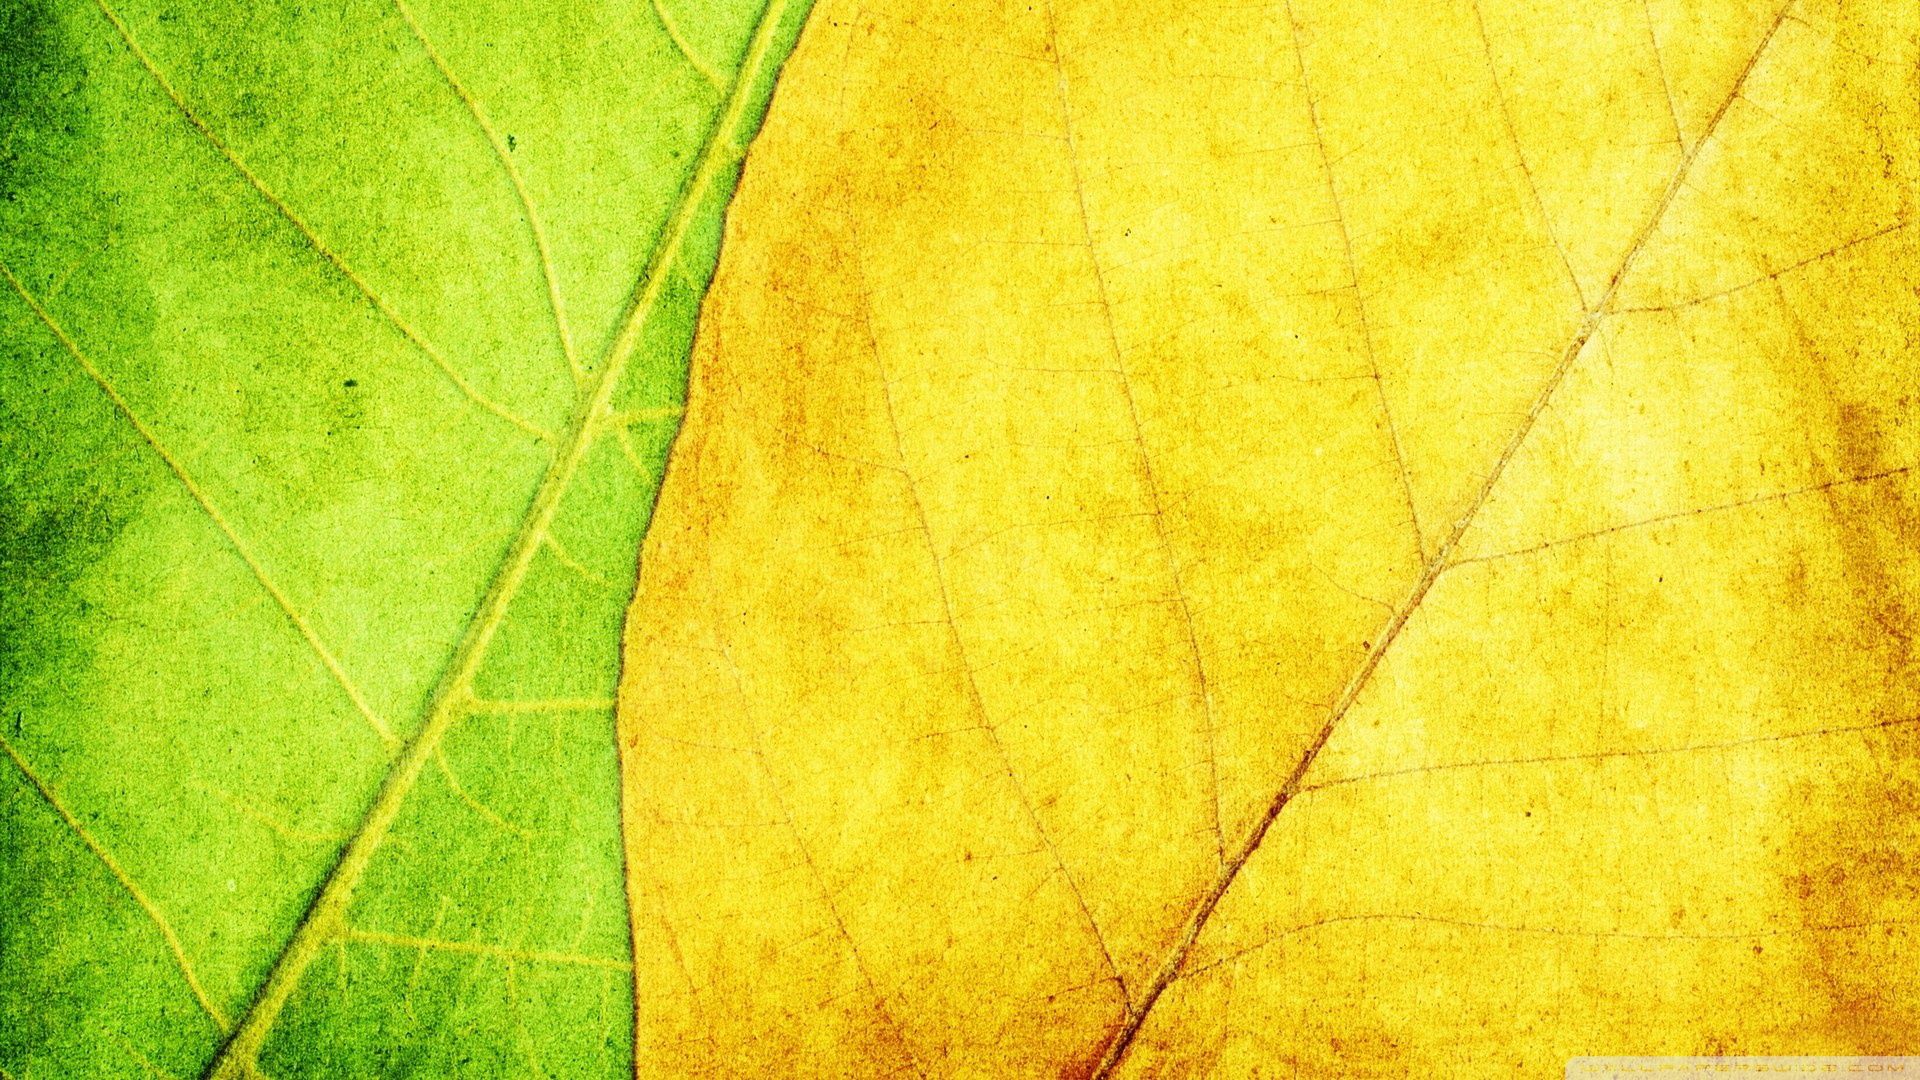 Green And Yellow Leaves Texture Ultra HD Desktop Background Wallpaper for 4K UHD TV, Widescreen & UltraWide Desktop & Laptop, Tablet